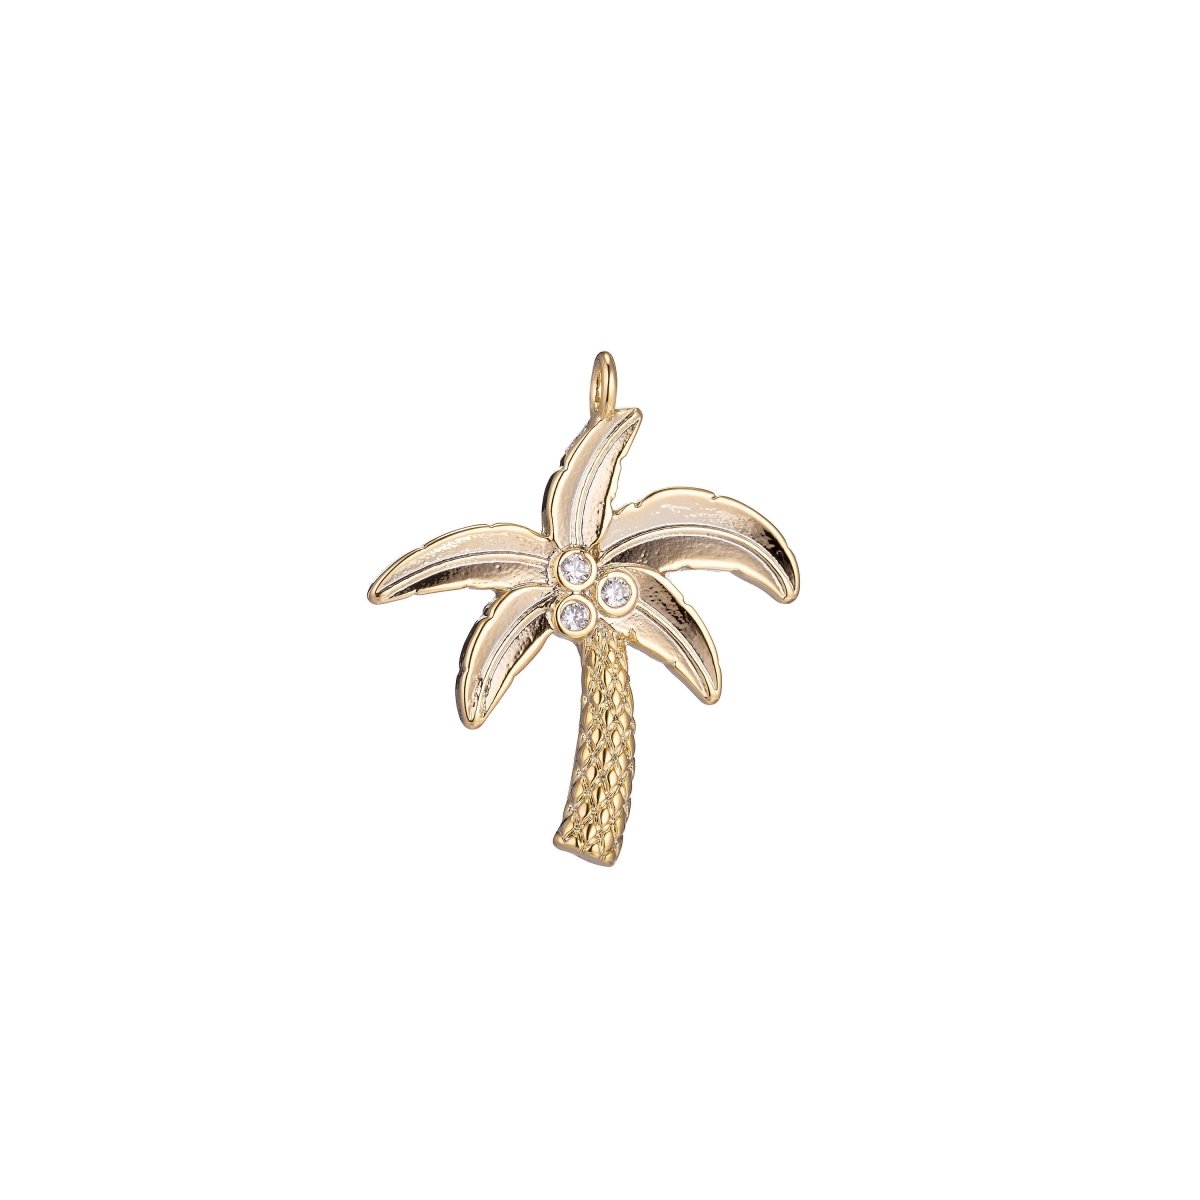 Dainty 18k Gold Filled Palm Tree Charm Tiny Coconut Tree Charm in CZ Charm for Bracelet Necklace Earring MakingC-348 - DLUXCA